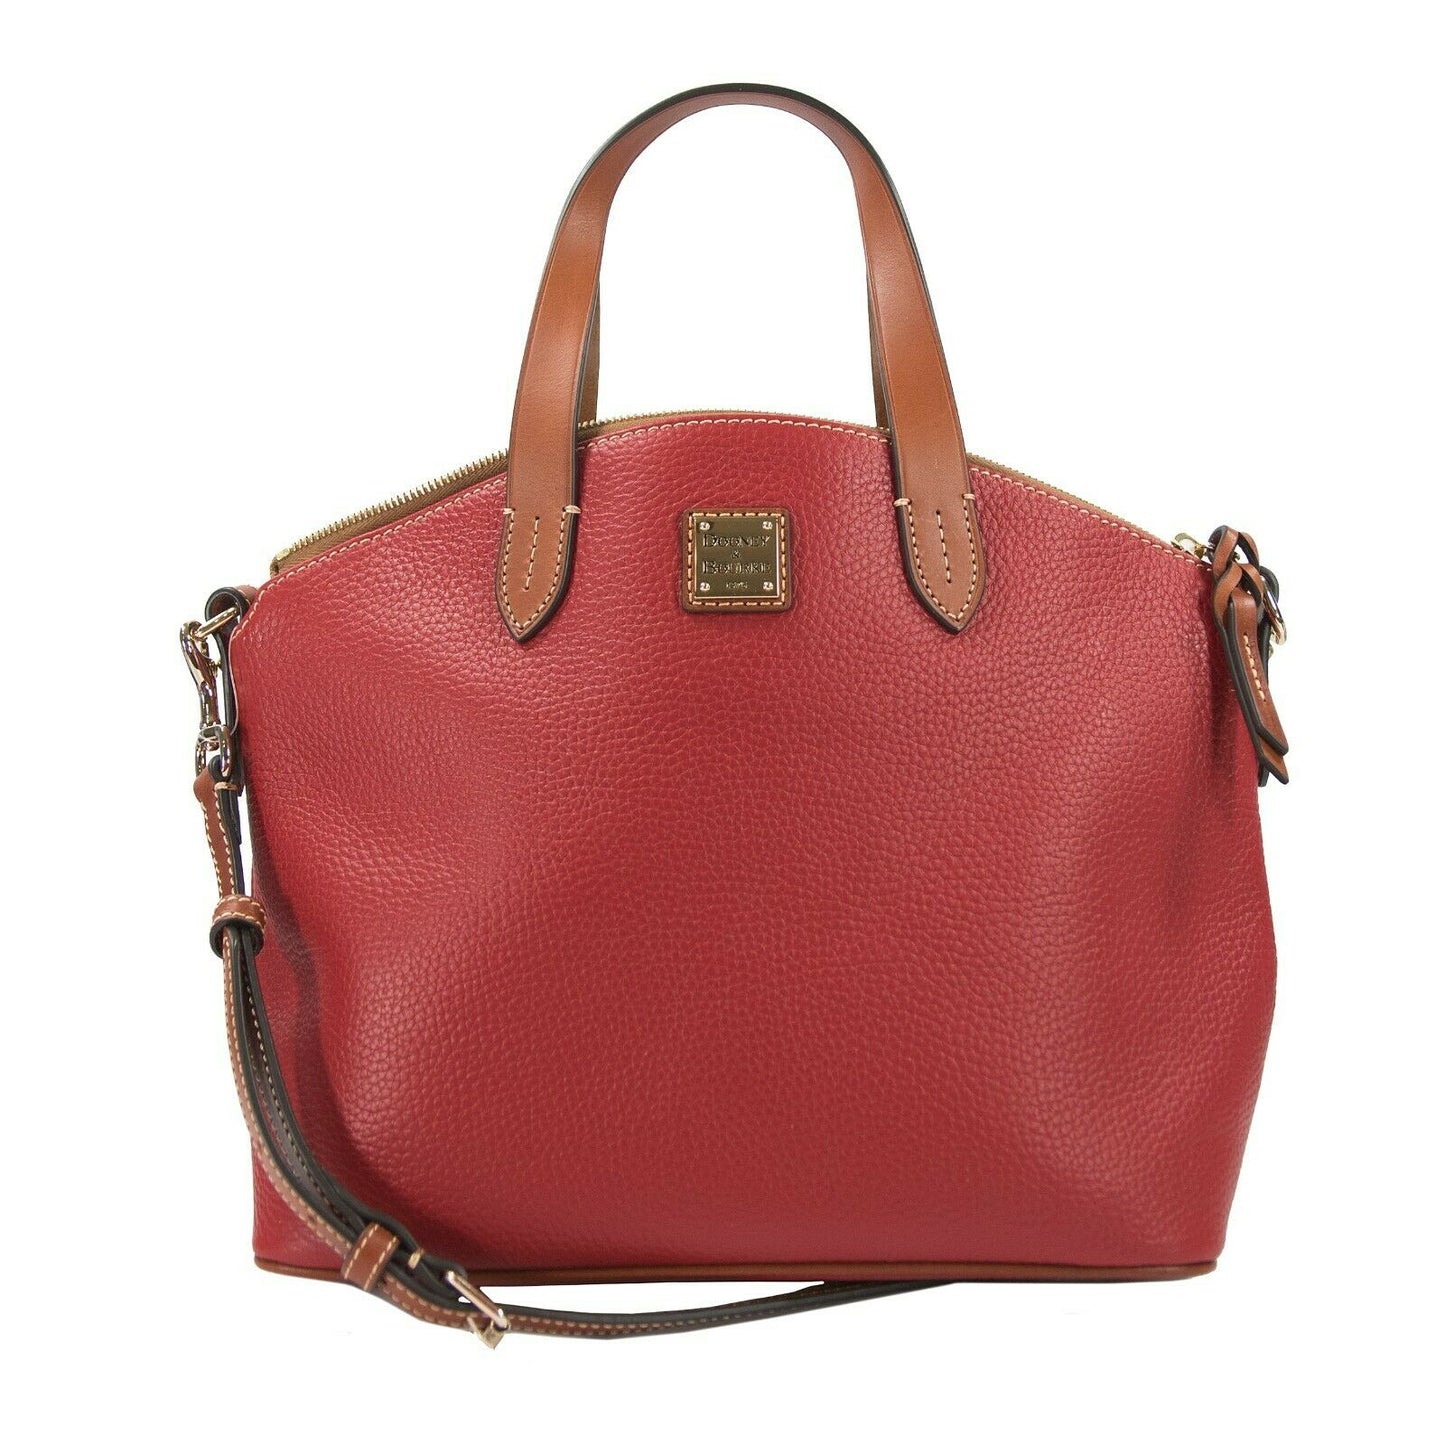 Dooney & Bourke Red Pebbled Leather Large Satchel Bag NWT